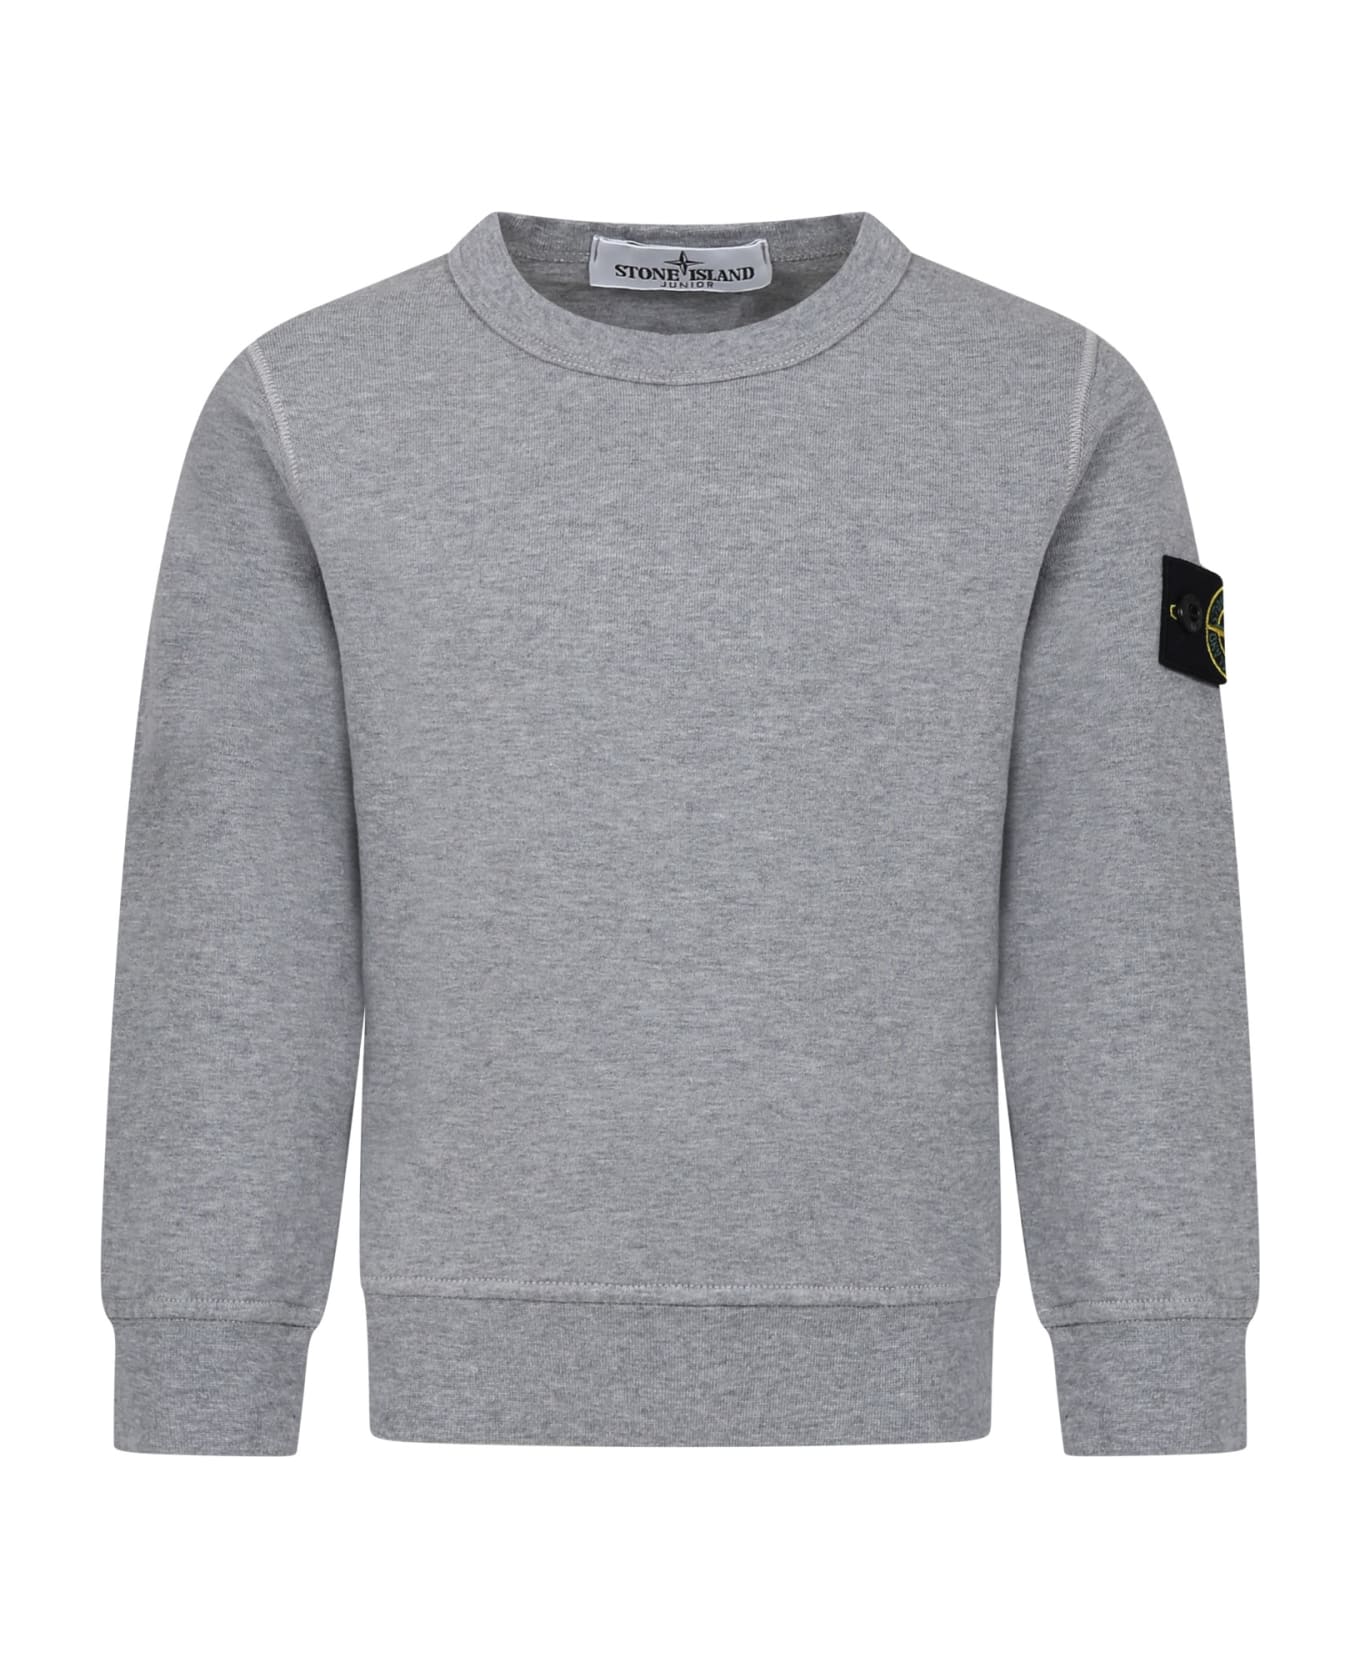 Stone Island Junior Grey Sweatshirt For Boy With Iconic Logo - Grey ニットウェア＆スウェットシャツ